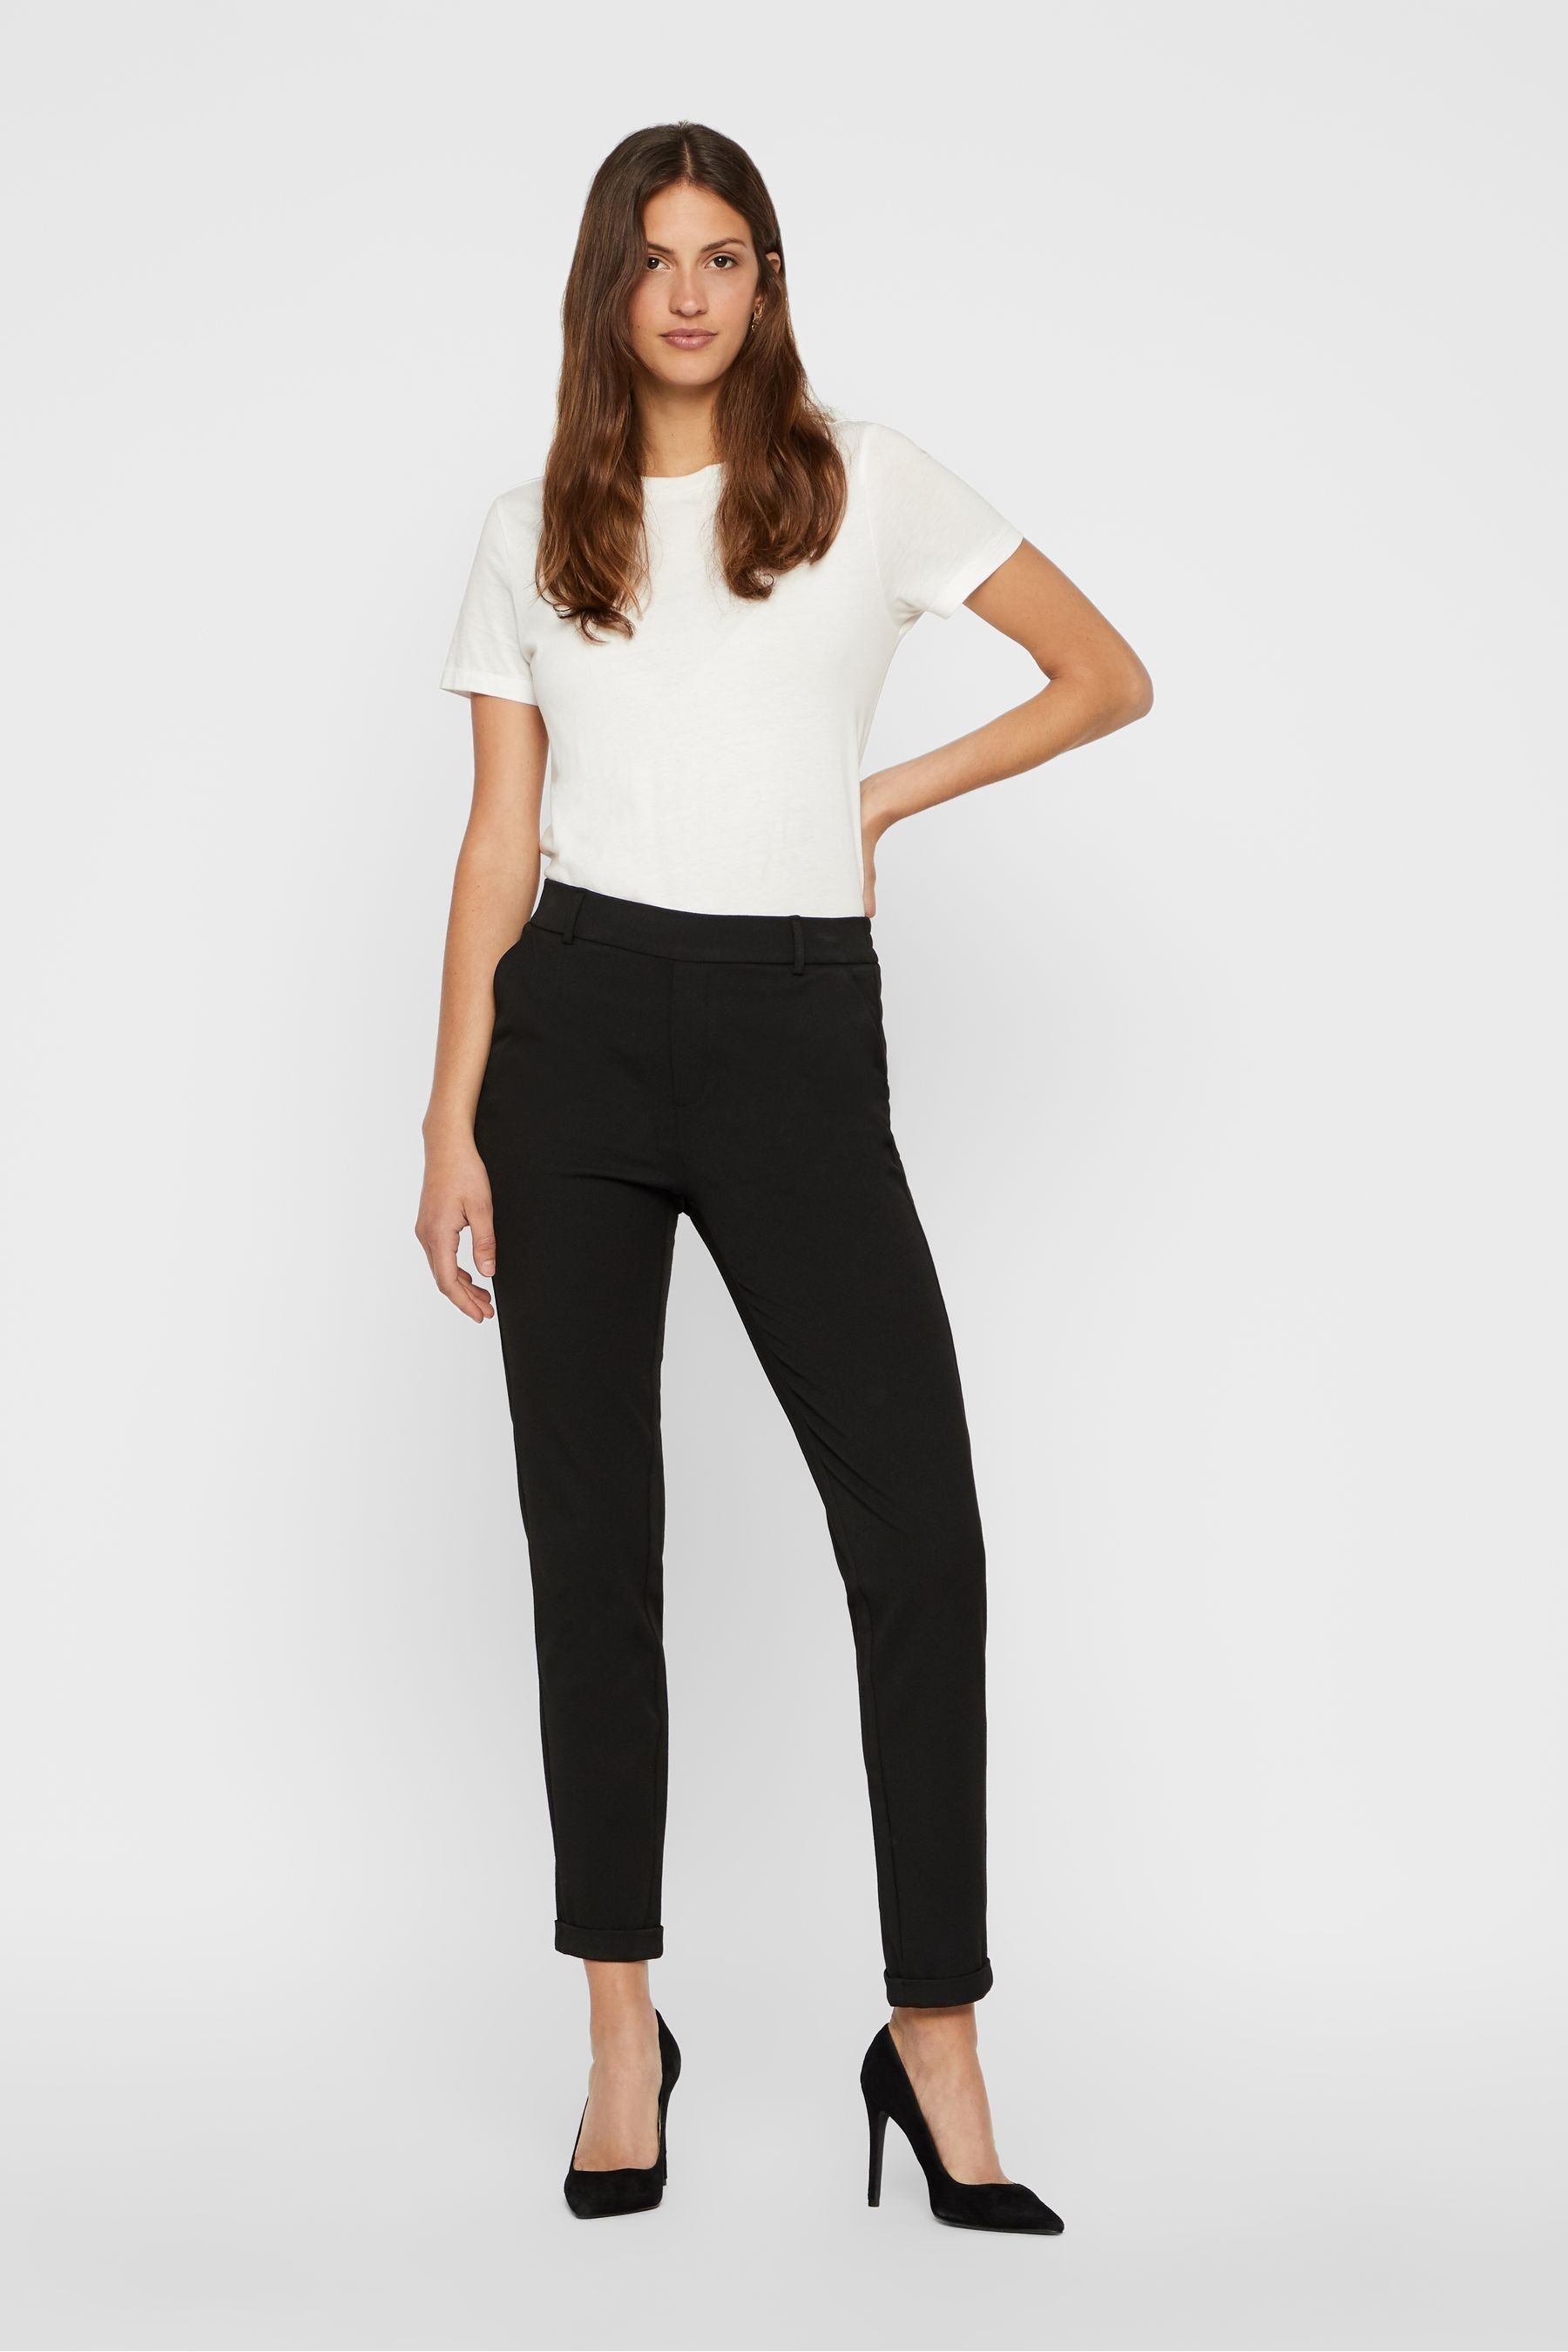 Buy VERO MODA Black Slim High Waisted Trouser from the Next UK online shop